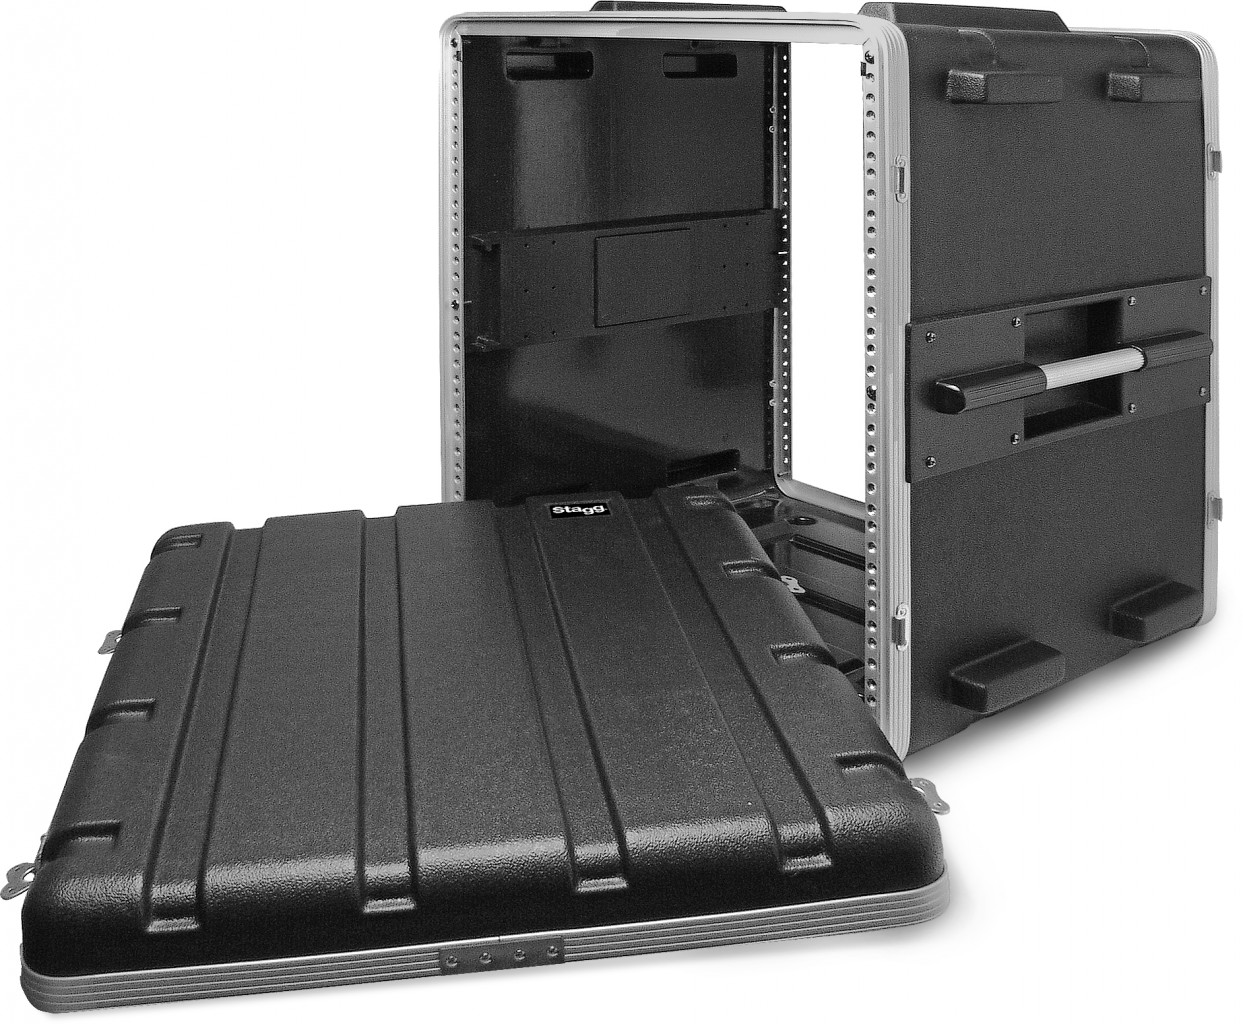 ABS case for 12-unit rack